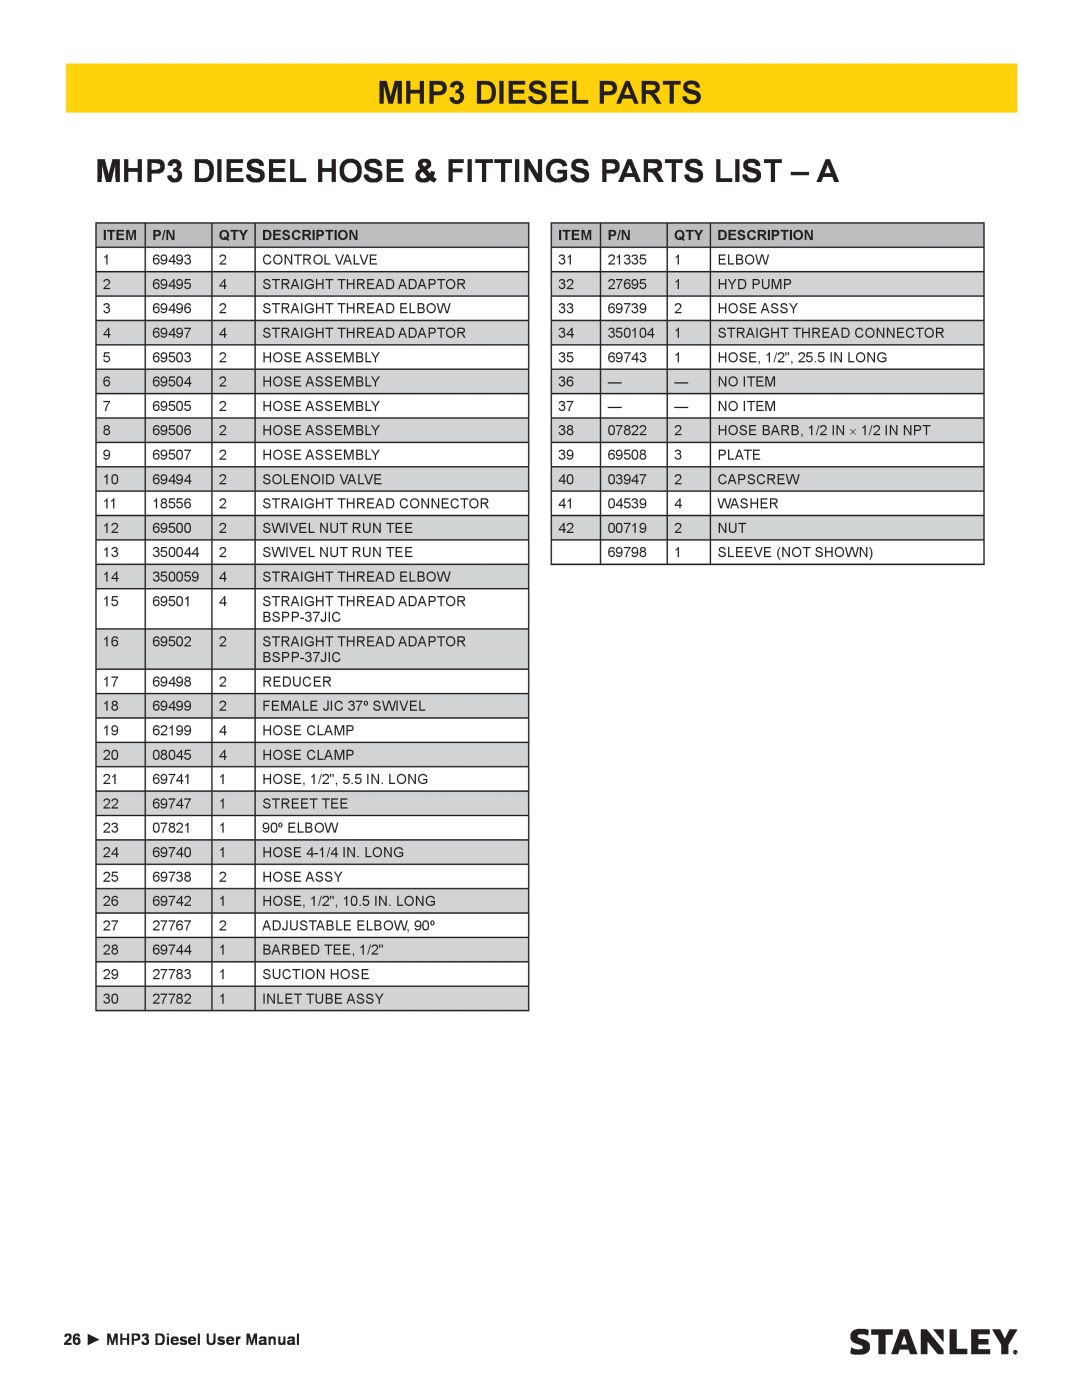 Stanley Black & Decker manual MHP3 DIESEL PARTS MHP3 DIESEL HOSE & FITTINGS PARTS LIST - A 